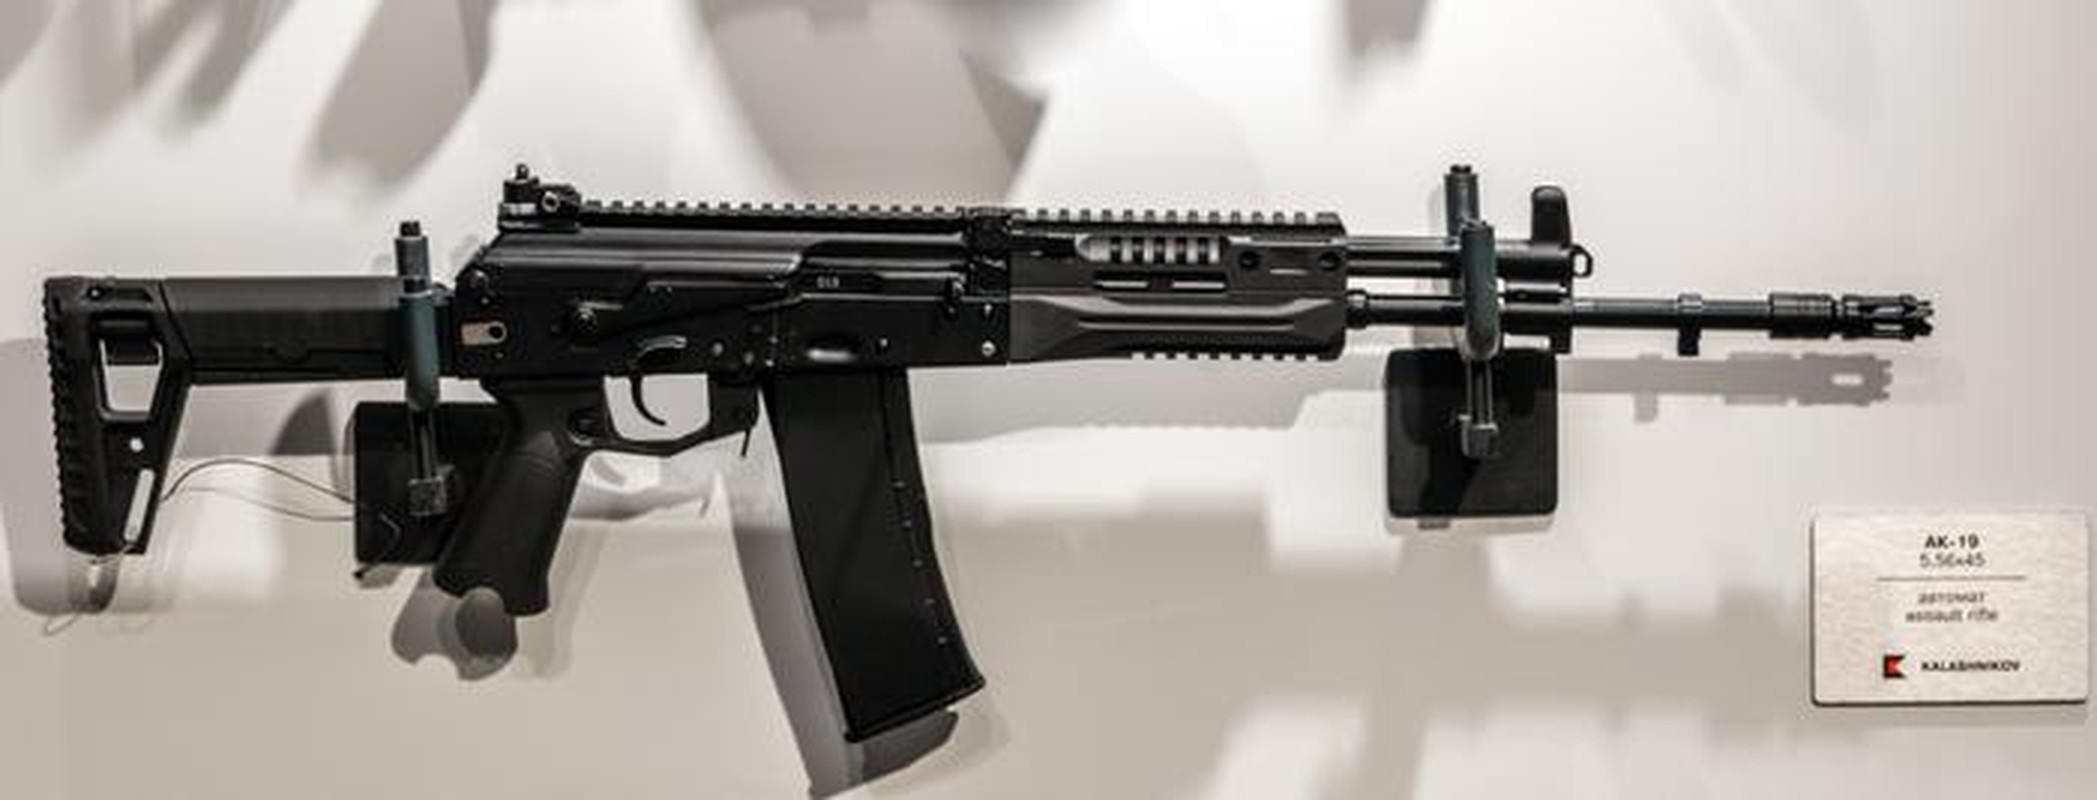 Phien ban AK-19 cua Nga chinh thuc trinh lang; co thay the AK-12?-Hinh-13